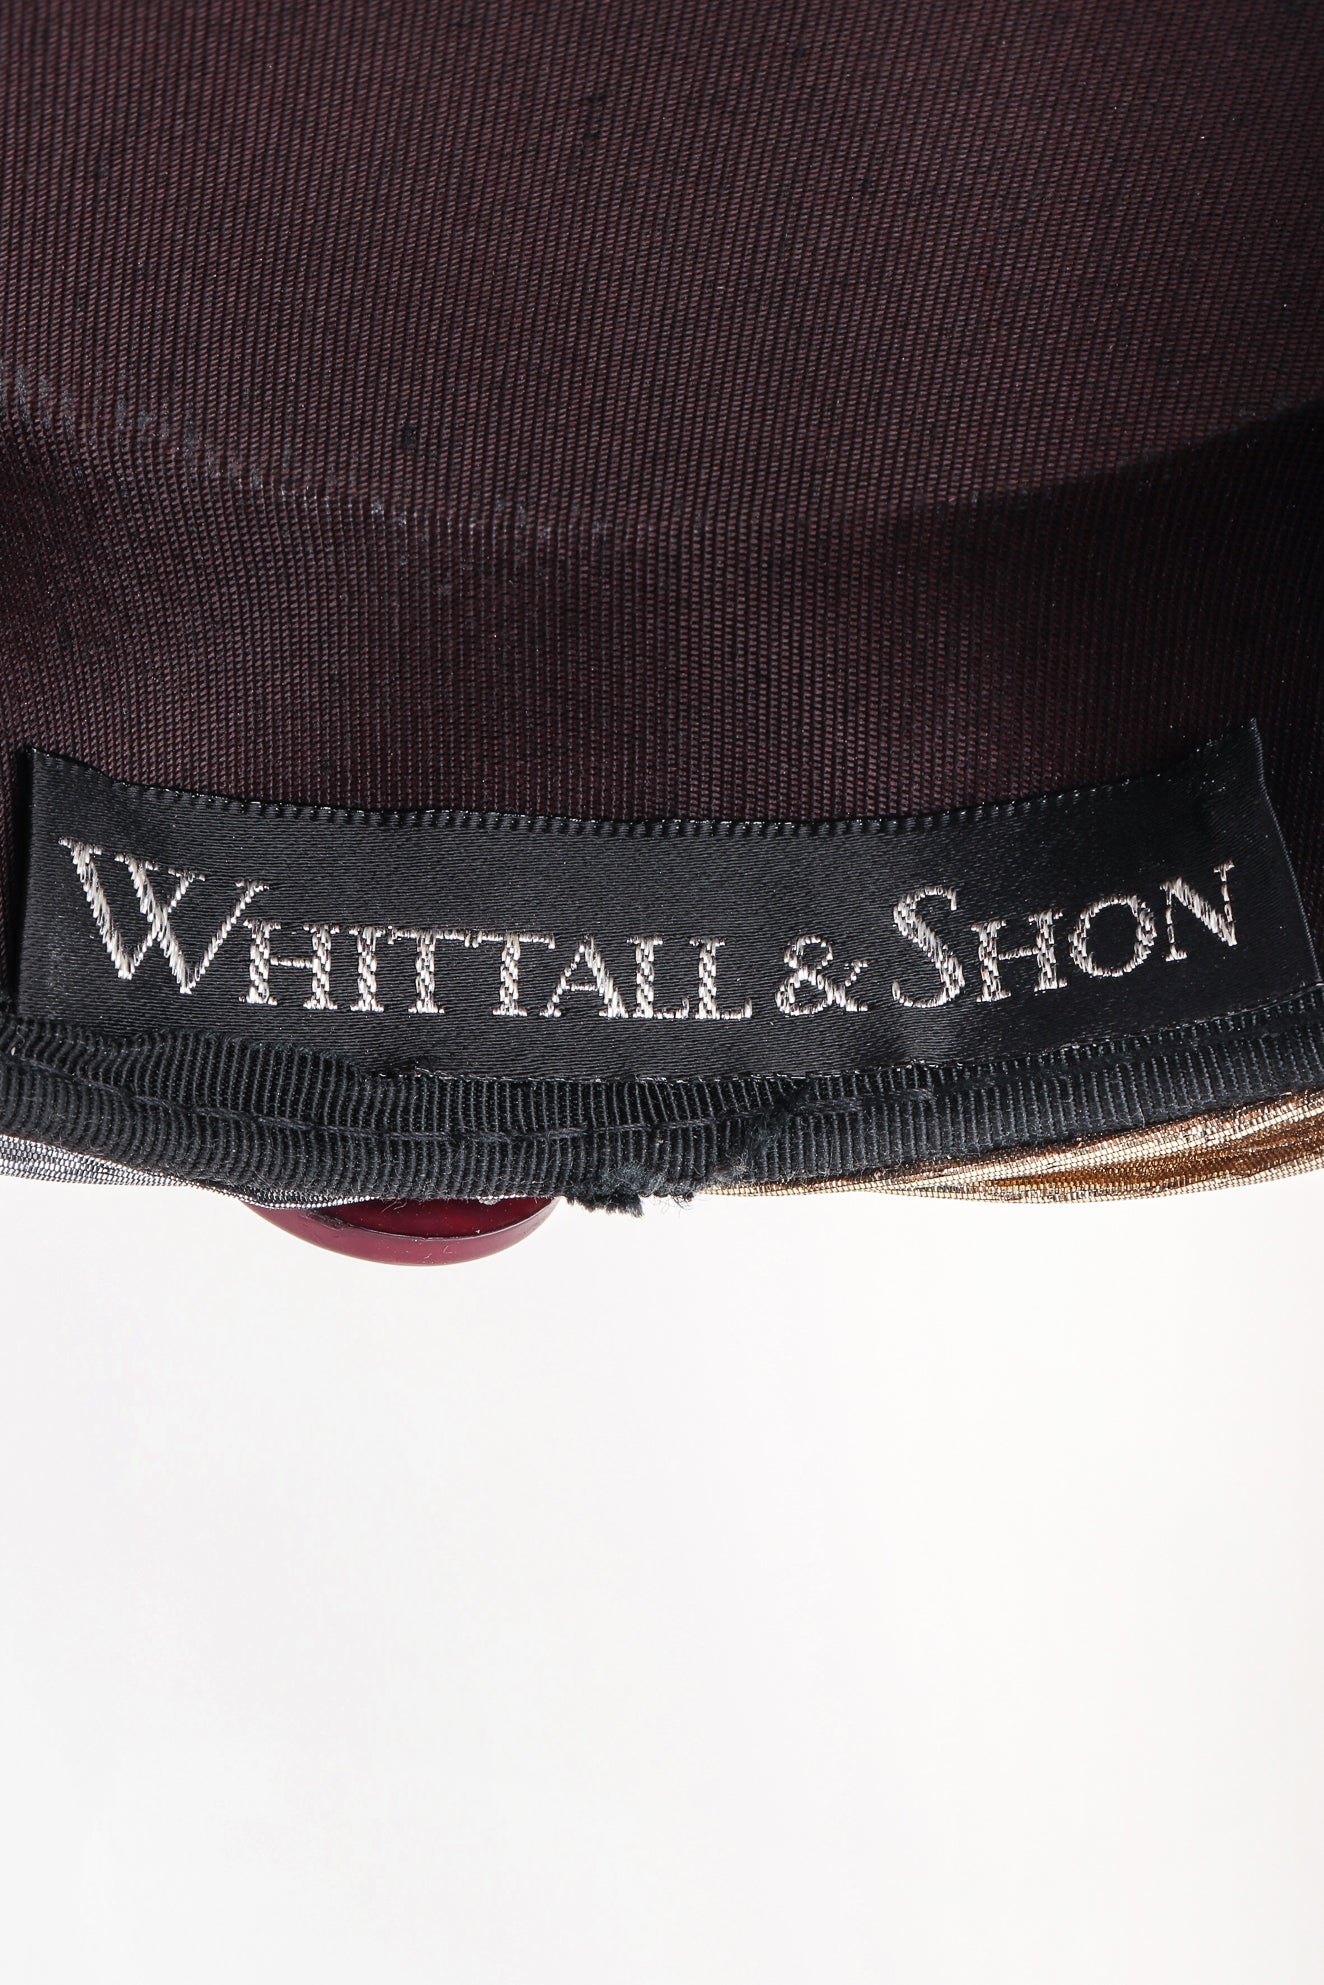 Recess Los Angeles Designer Consignment Vintage Whittall & Shon Metallic Lamé Crystal Fan Fortune Teller Hat